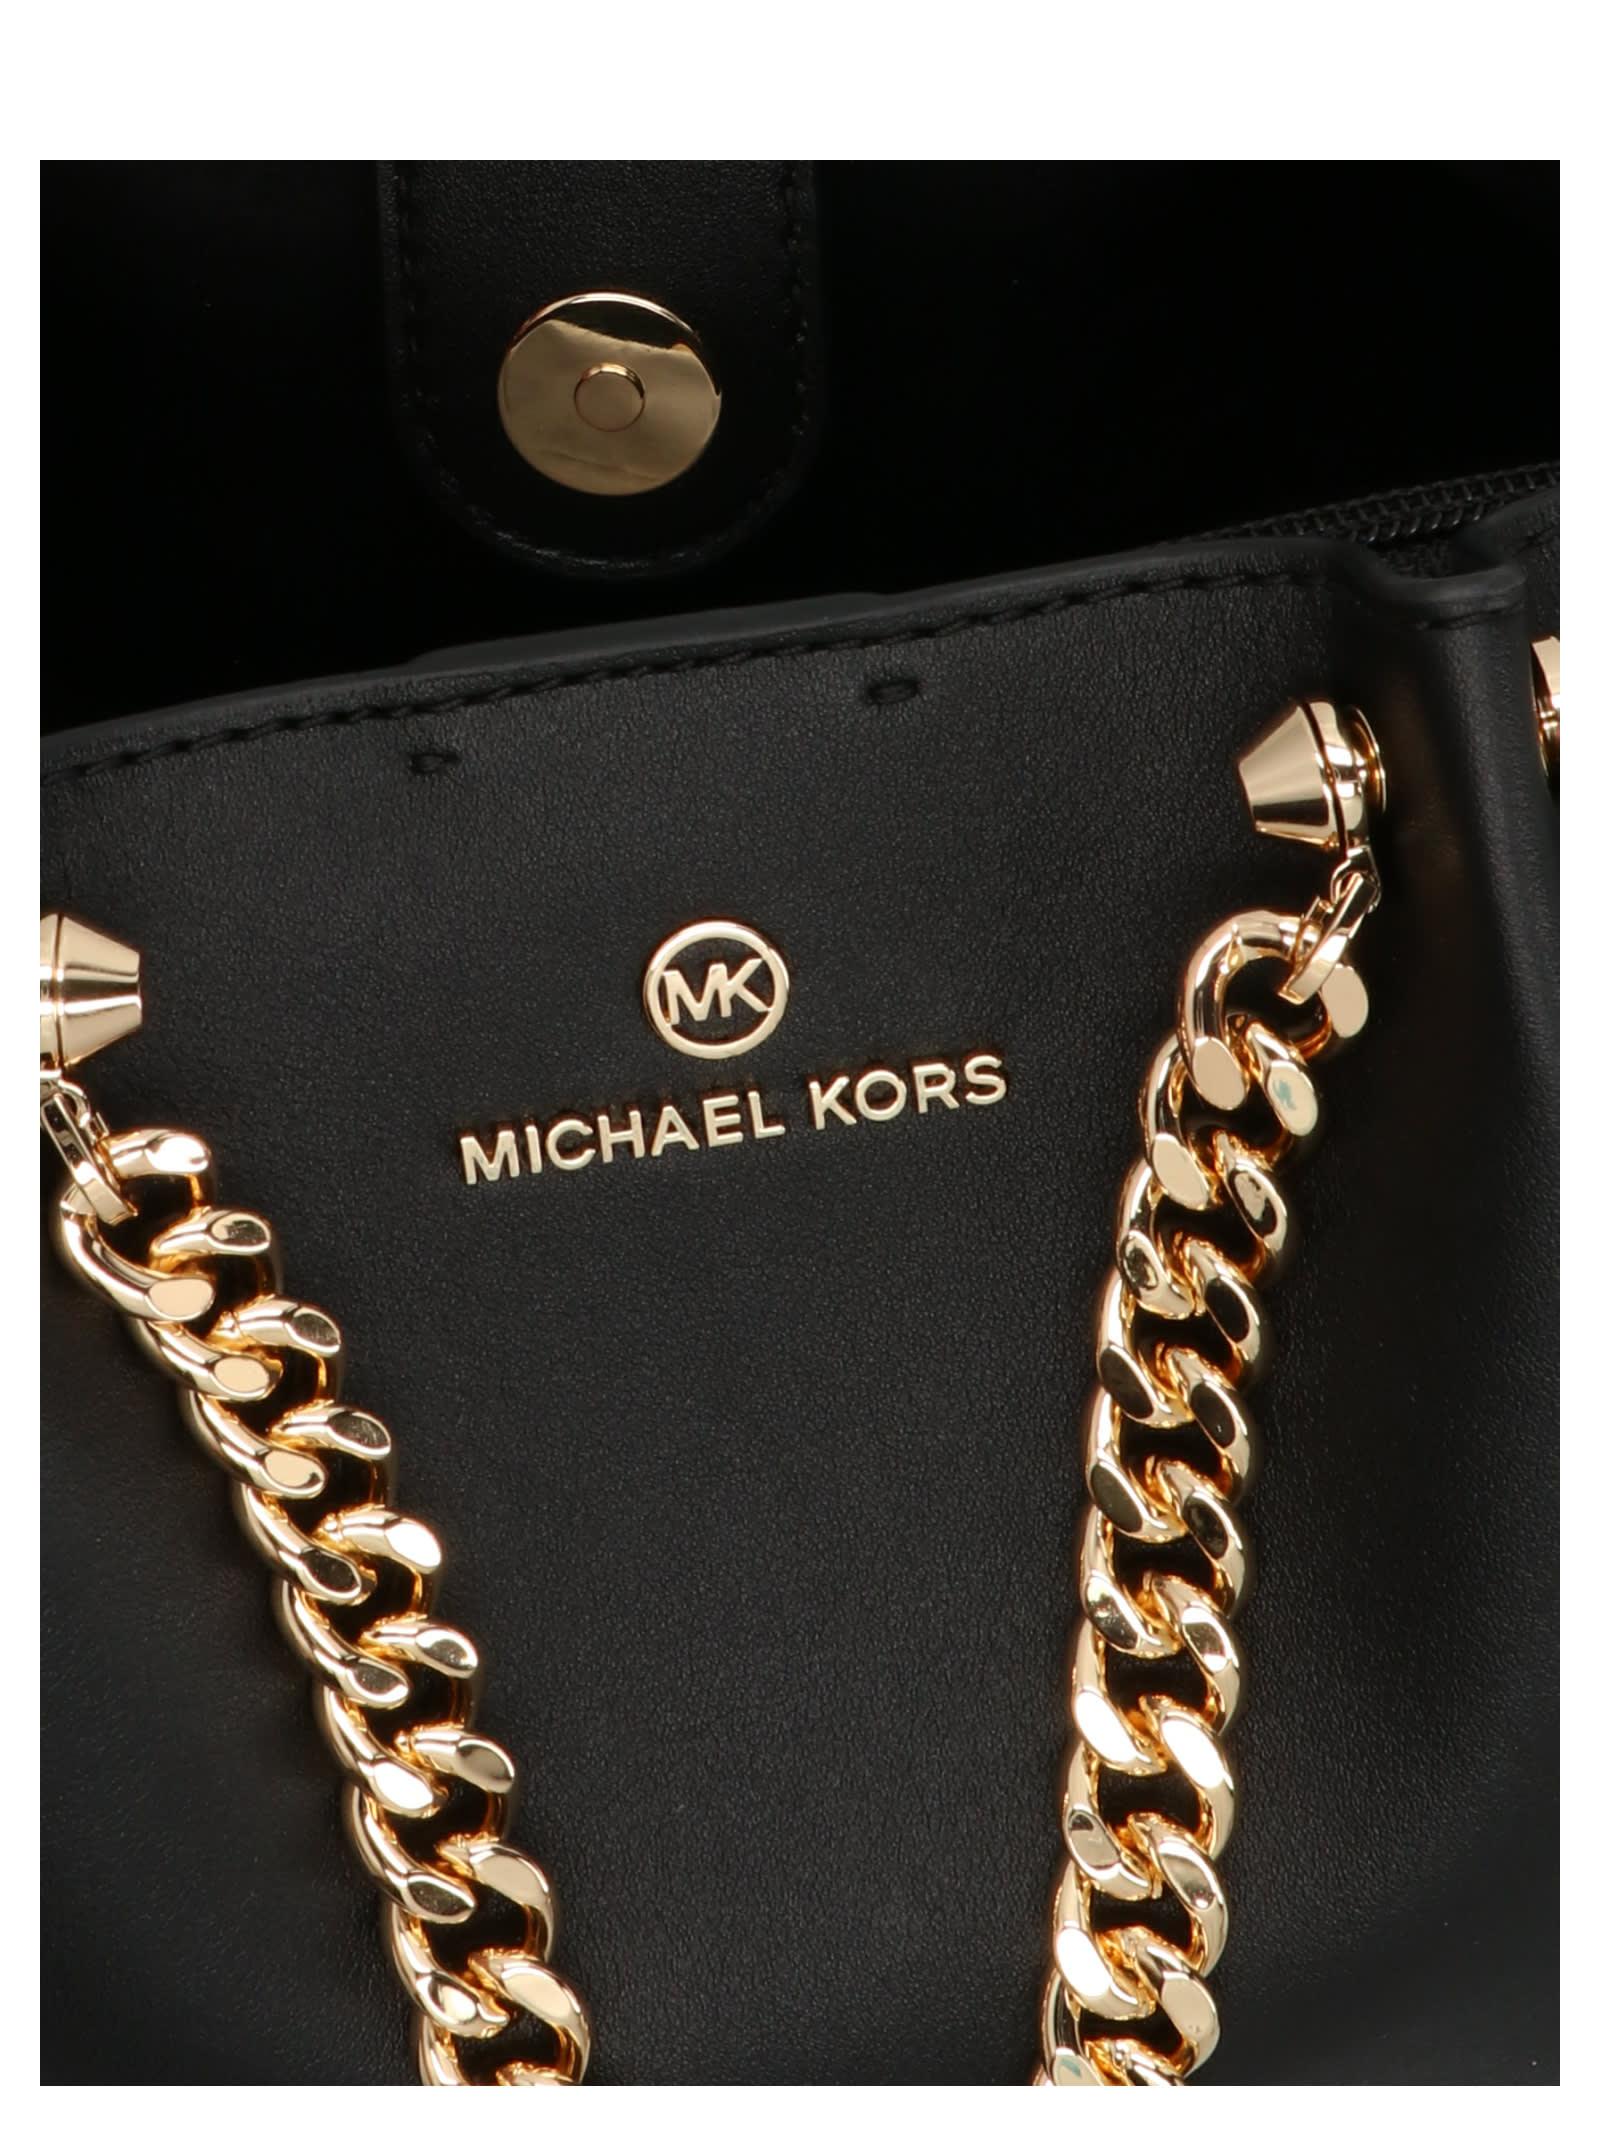 Michael Kors Zena Small Handbag in Black | Lyst